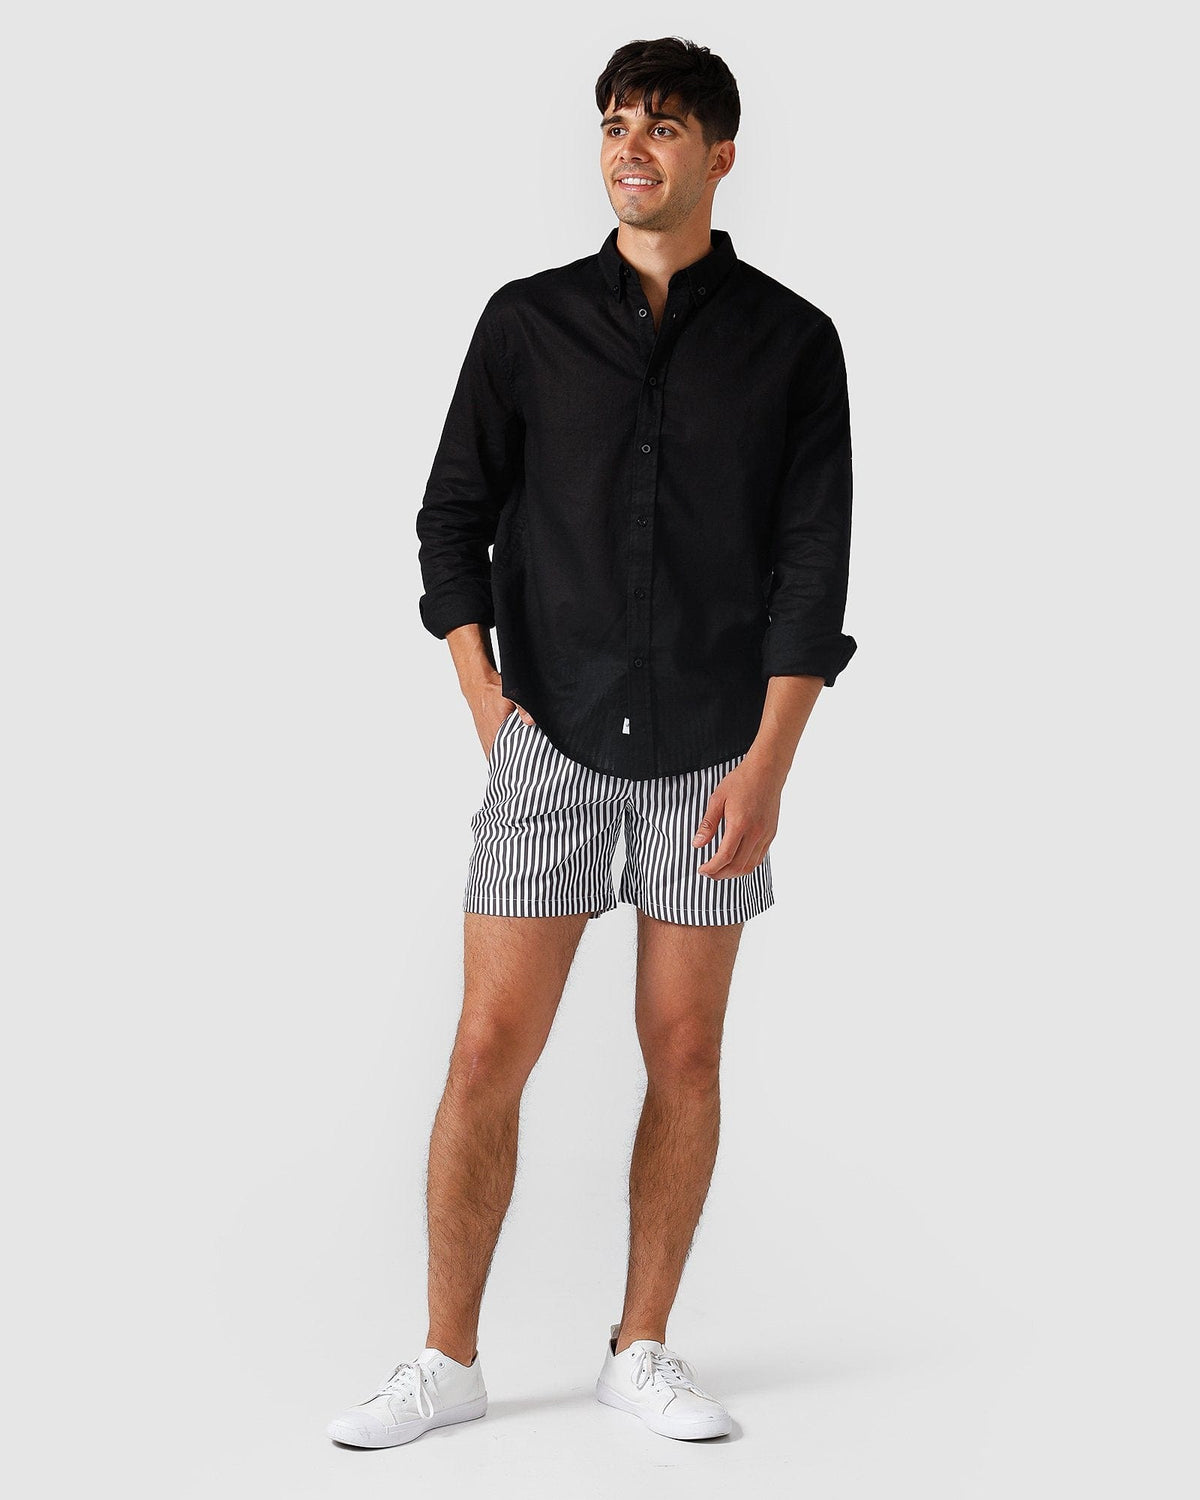 Linen Shirt - Black* - Vacay Swimwear - Splash Swimwear  - mens, mens clothing, mens sale, mens shirts, vacay - Splash Swimwear 